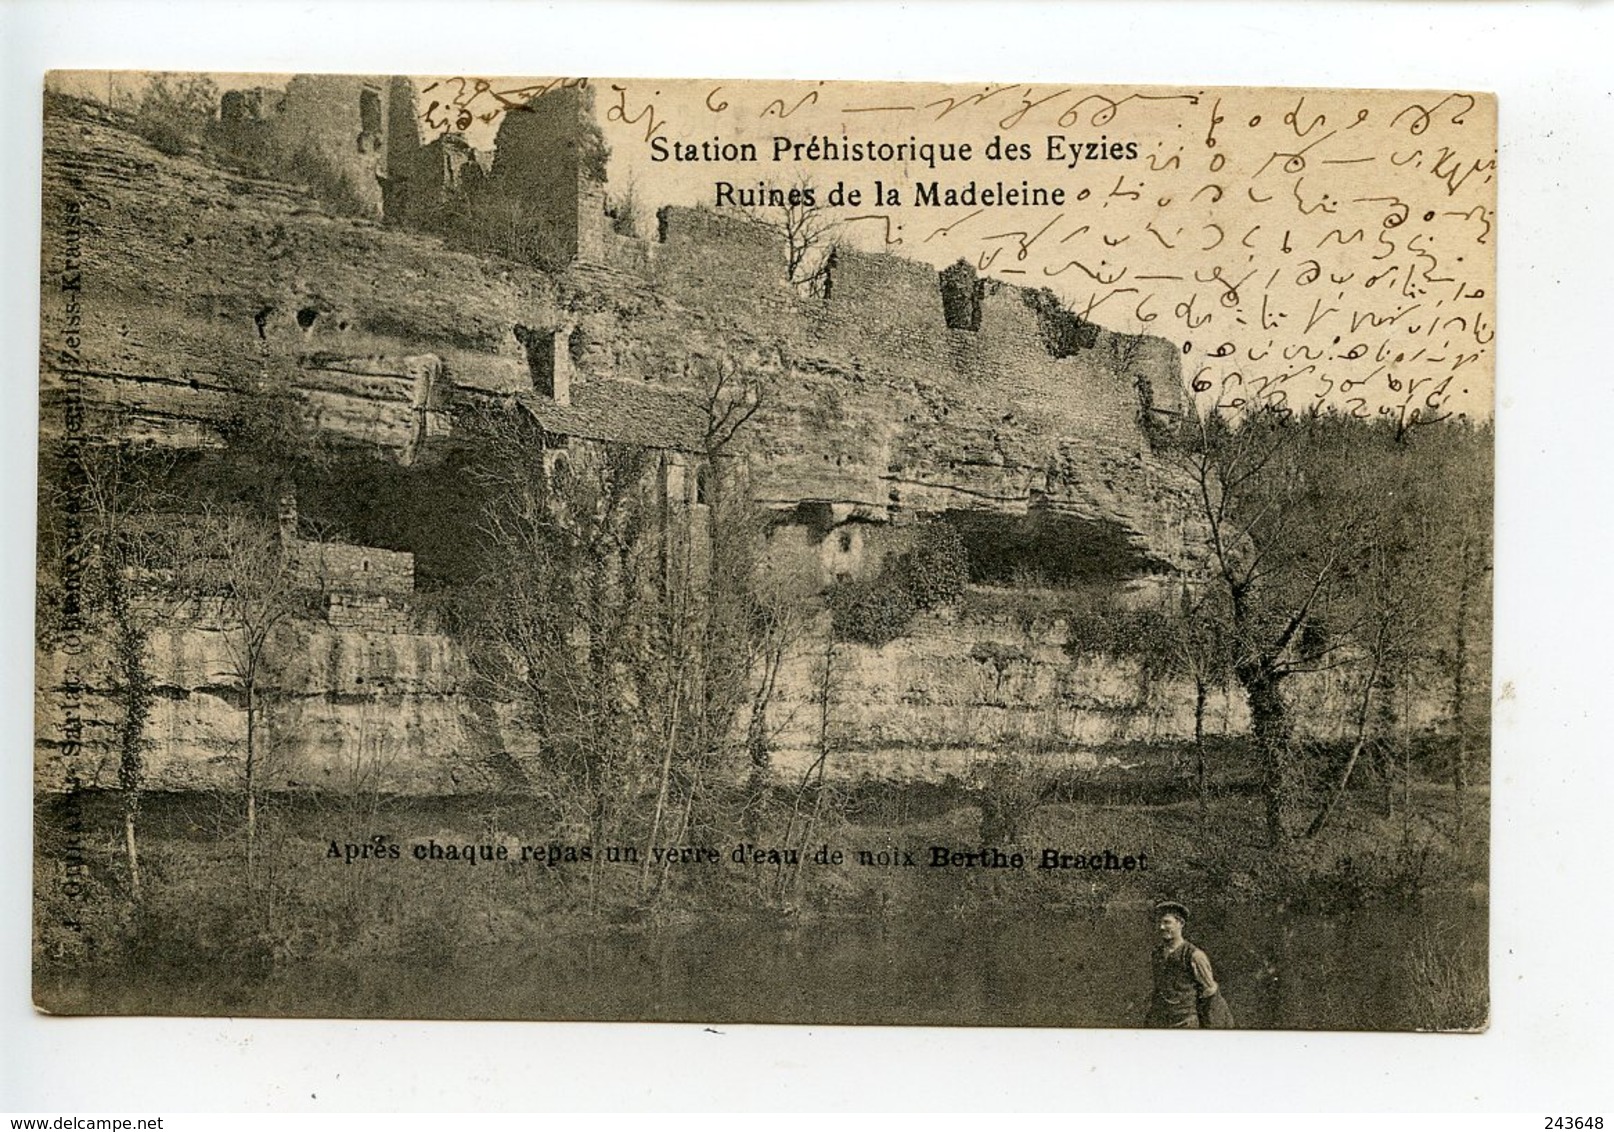 Les Eyzies Ruines De La Madeleine - Riberac